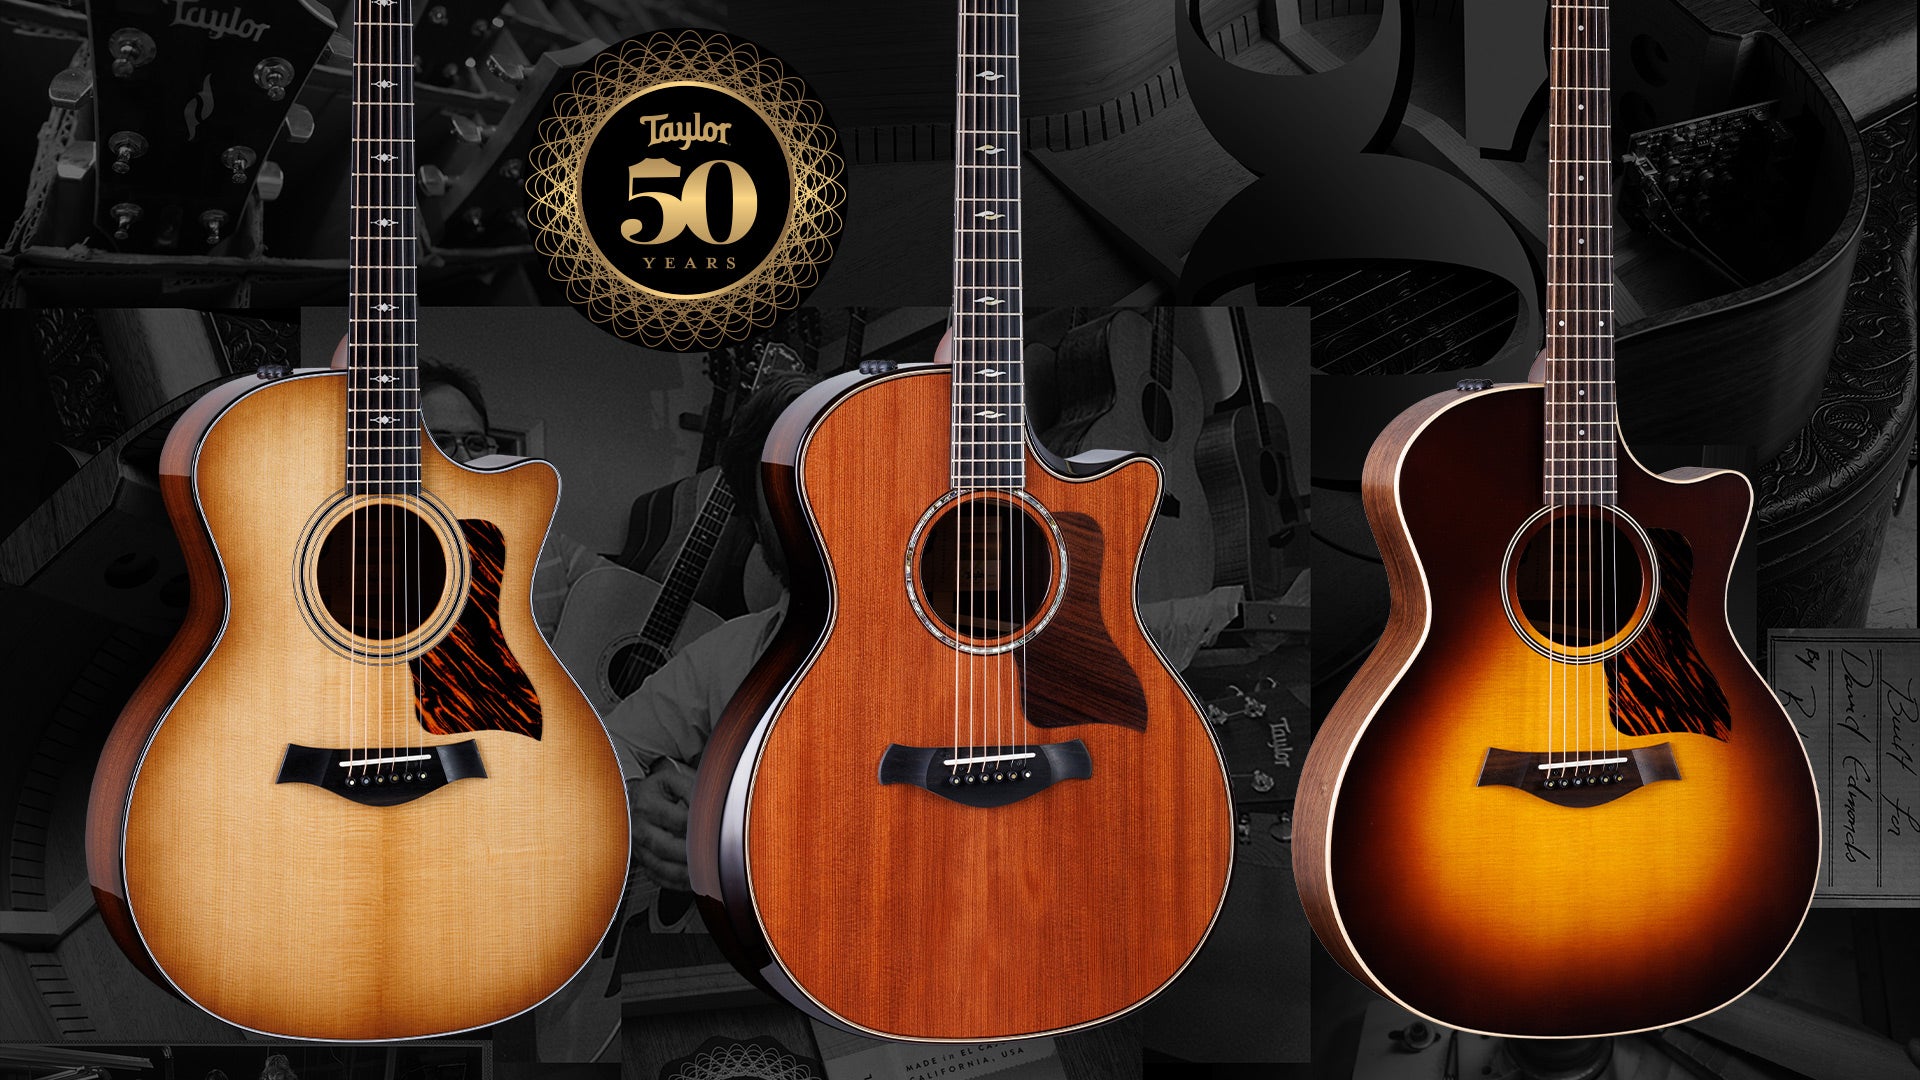 Celebrating 50 years of Taylor Guitars